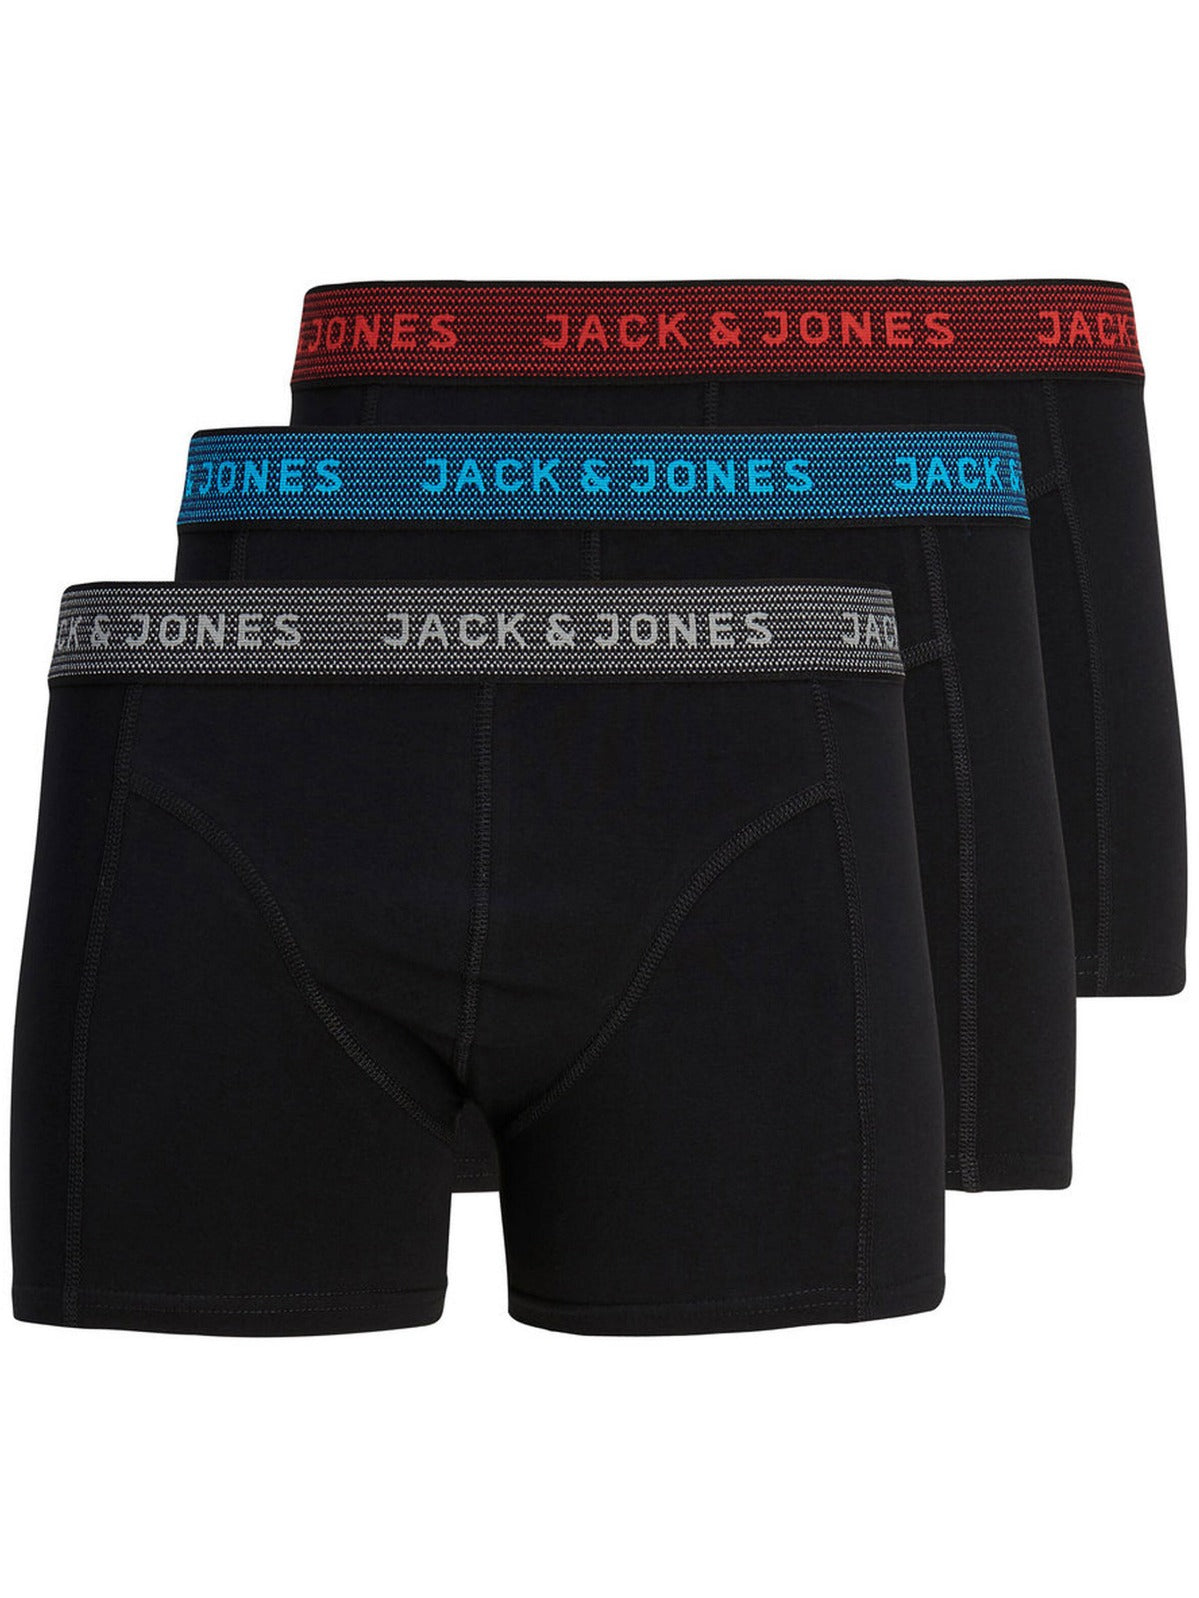 12127816 Mens Basic Jack and Jones Jaquard Waistband Boxer Trunks 3 Pack JACK AND JONES RAWDENIM